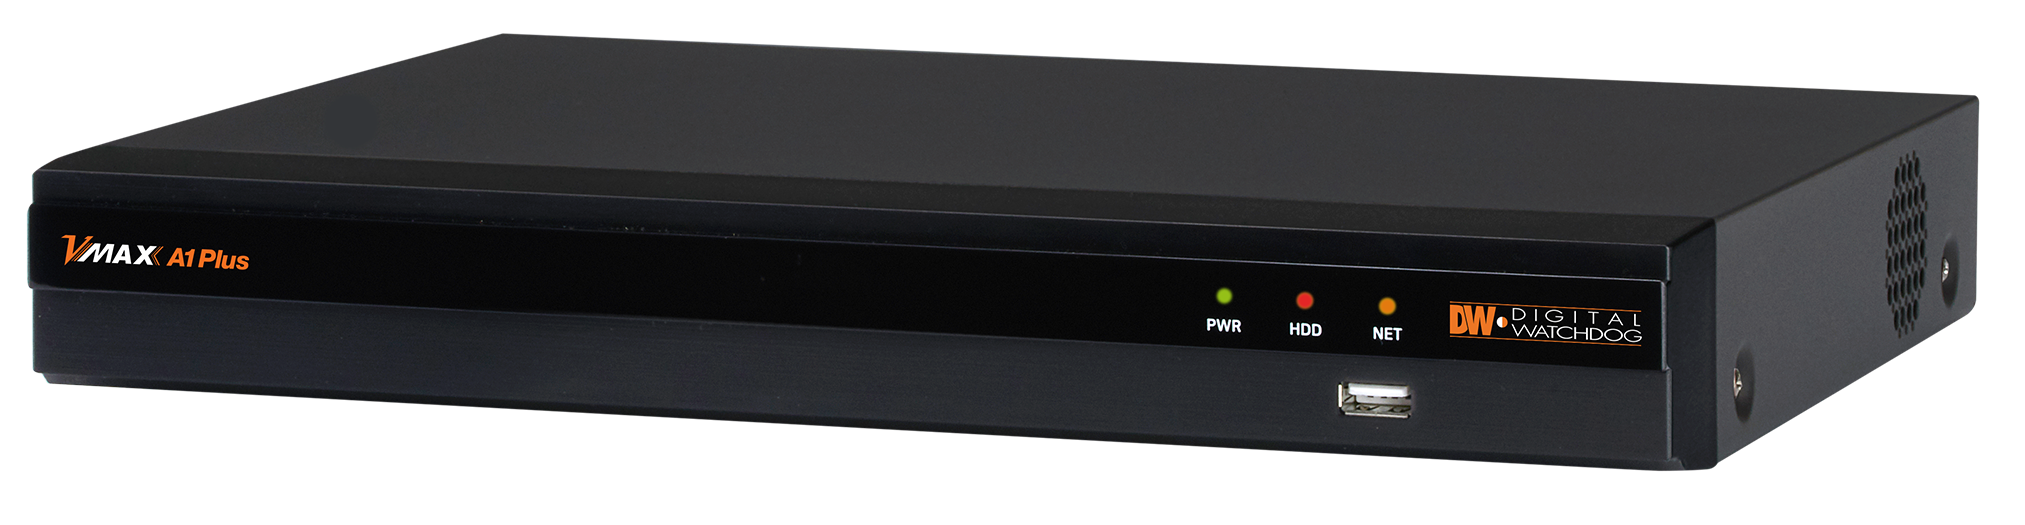 Digital Watchdog DW-VA1P42T  UHDoC - DVR 4ch 4 Channel Universal HD Over Coax DVR